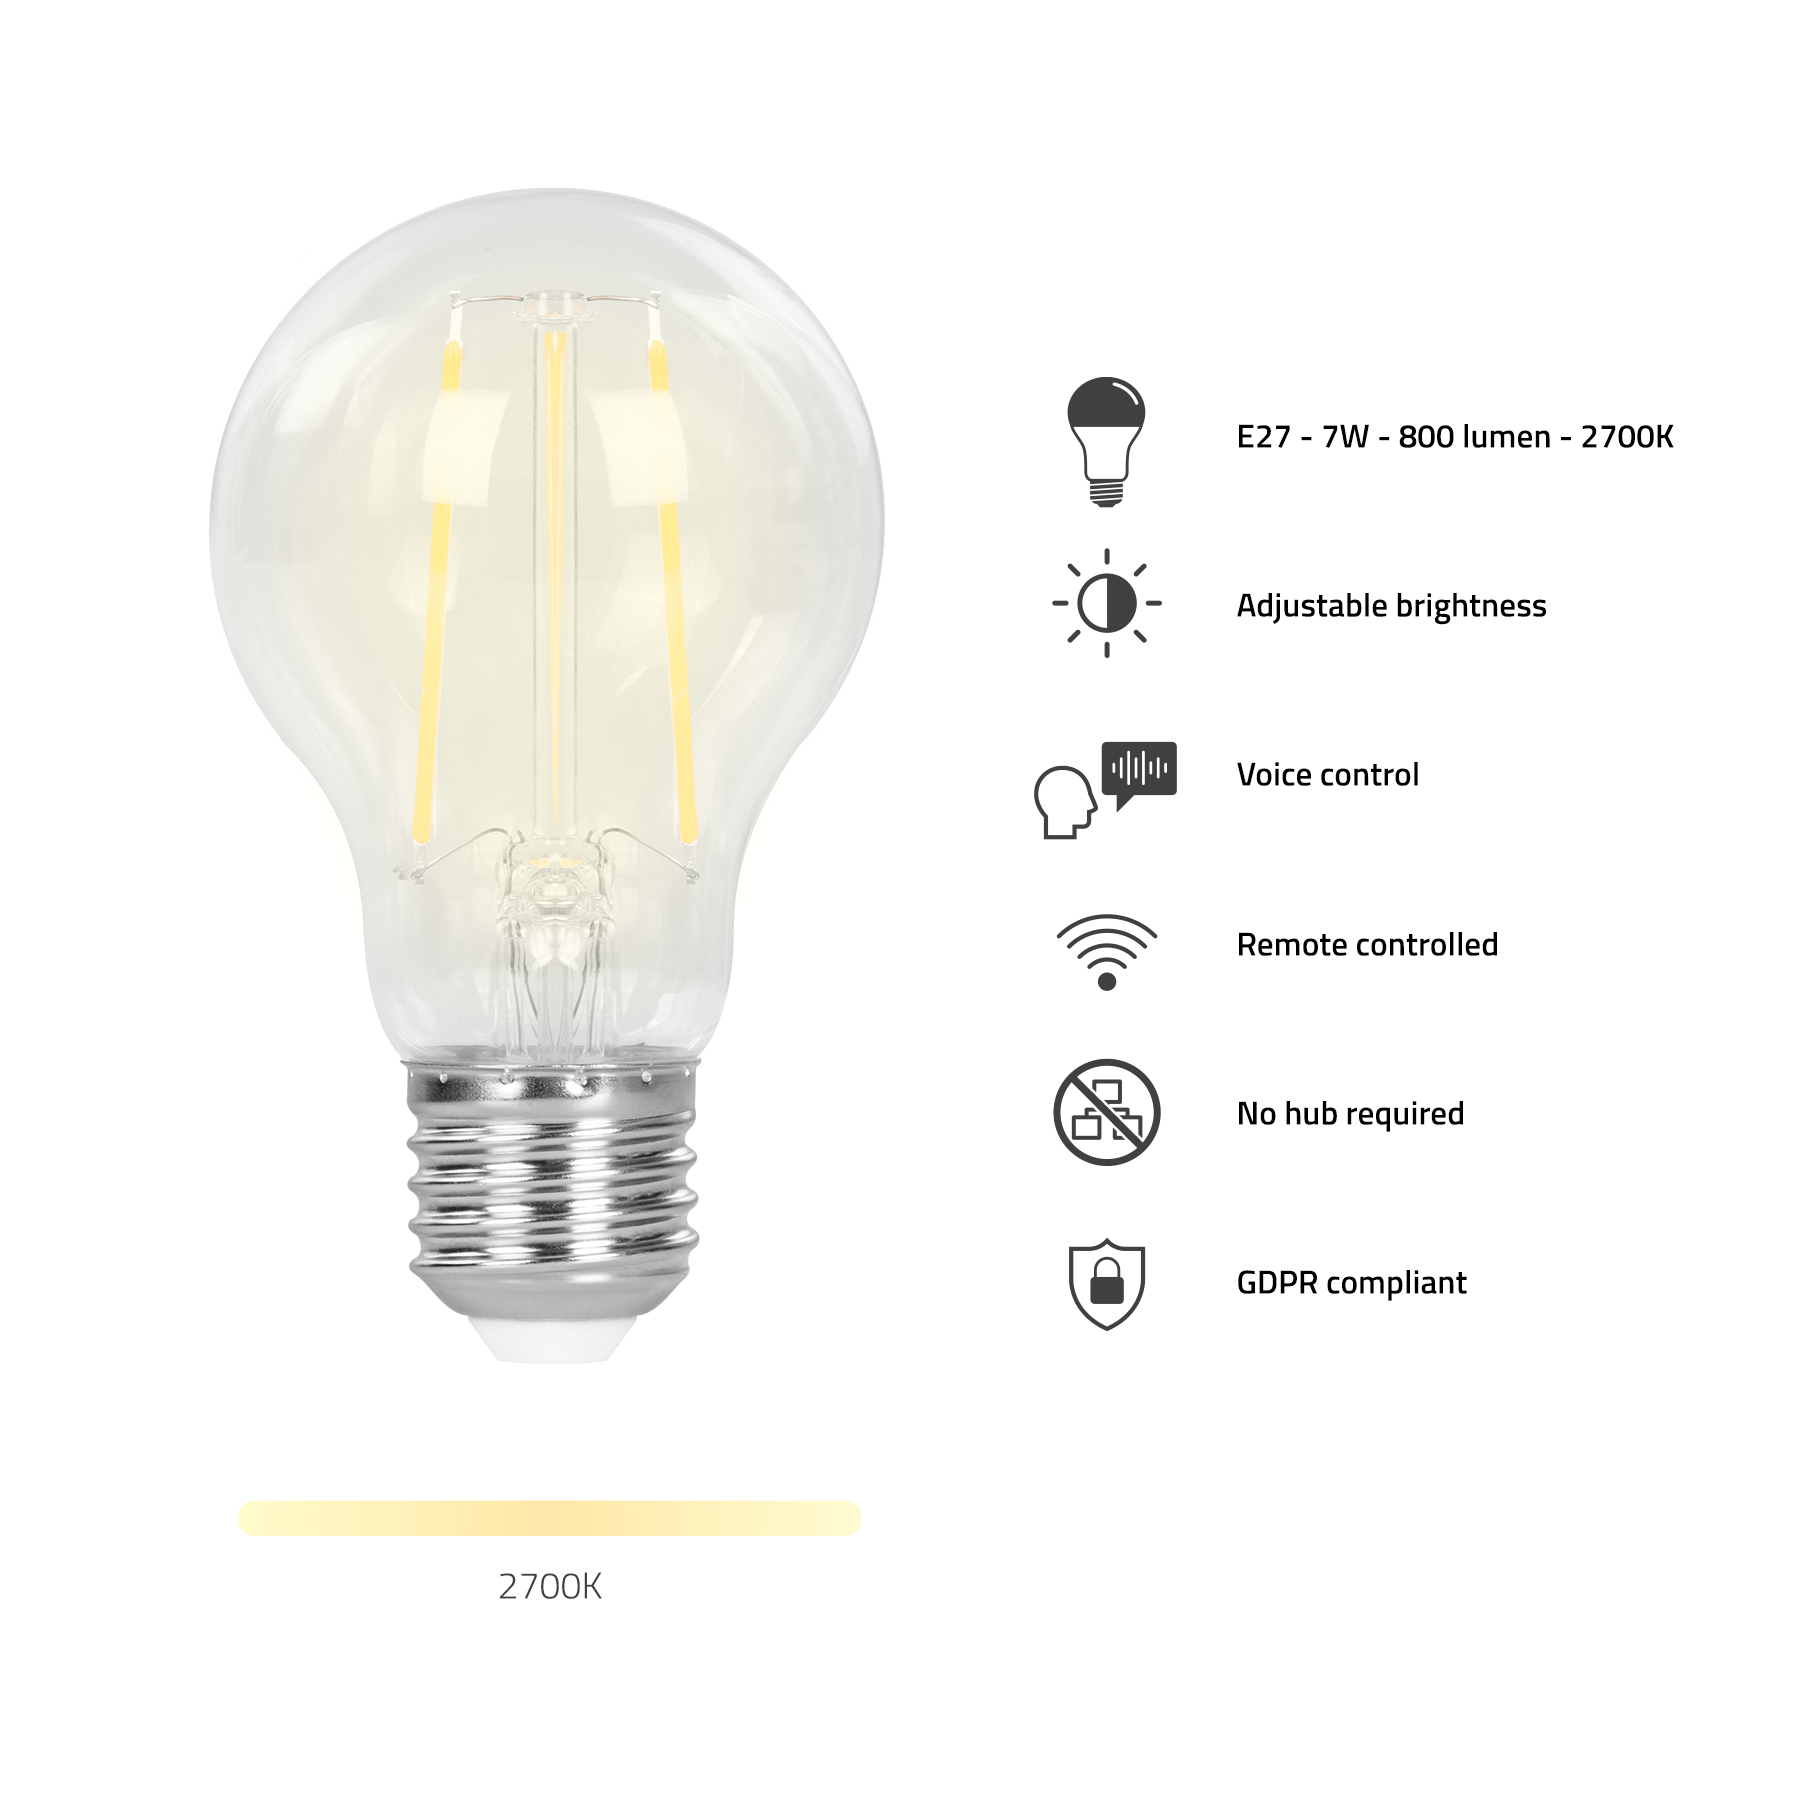 Hombli Slimme Filament Lamp E27 7W WiFi 4 pack